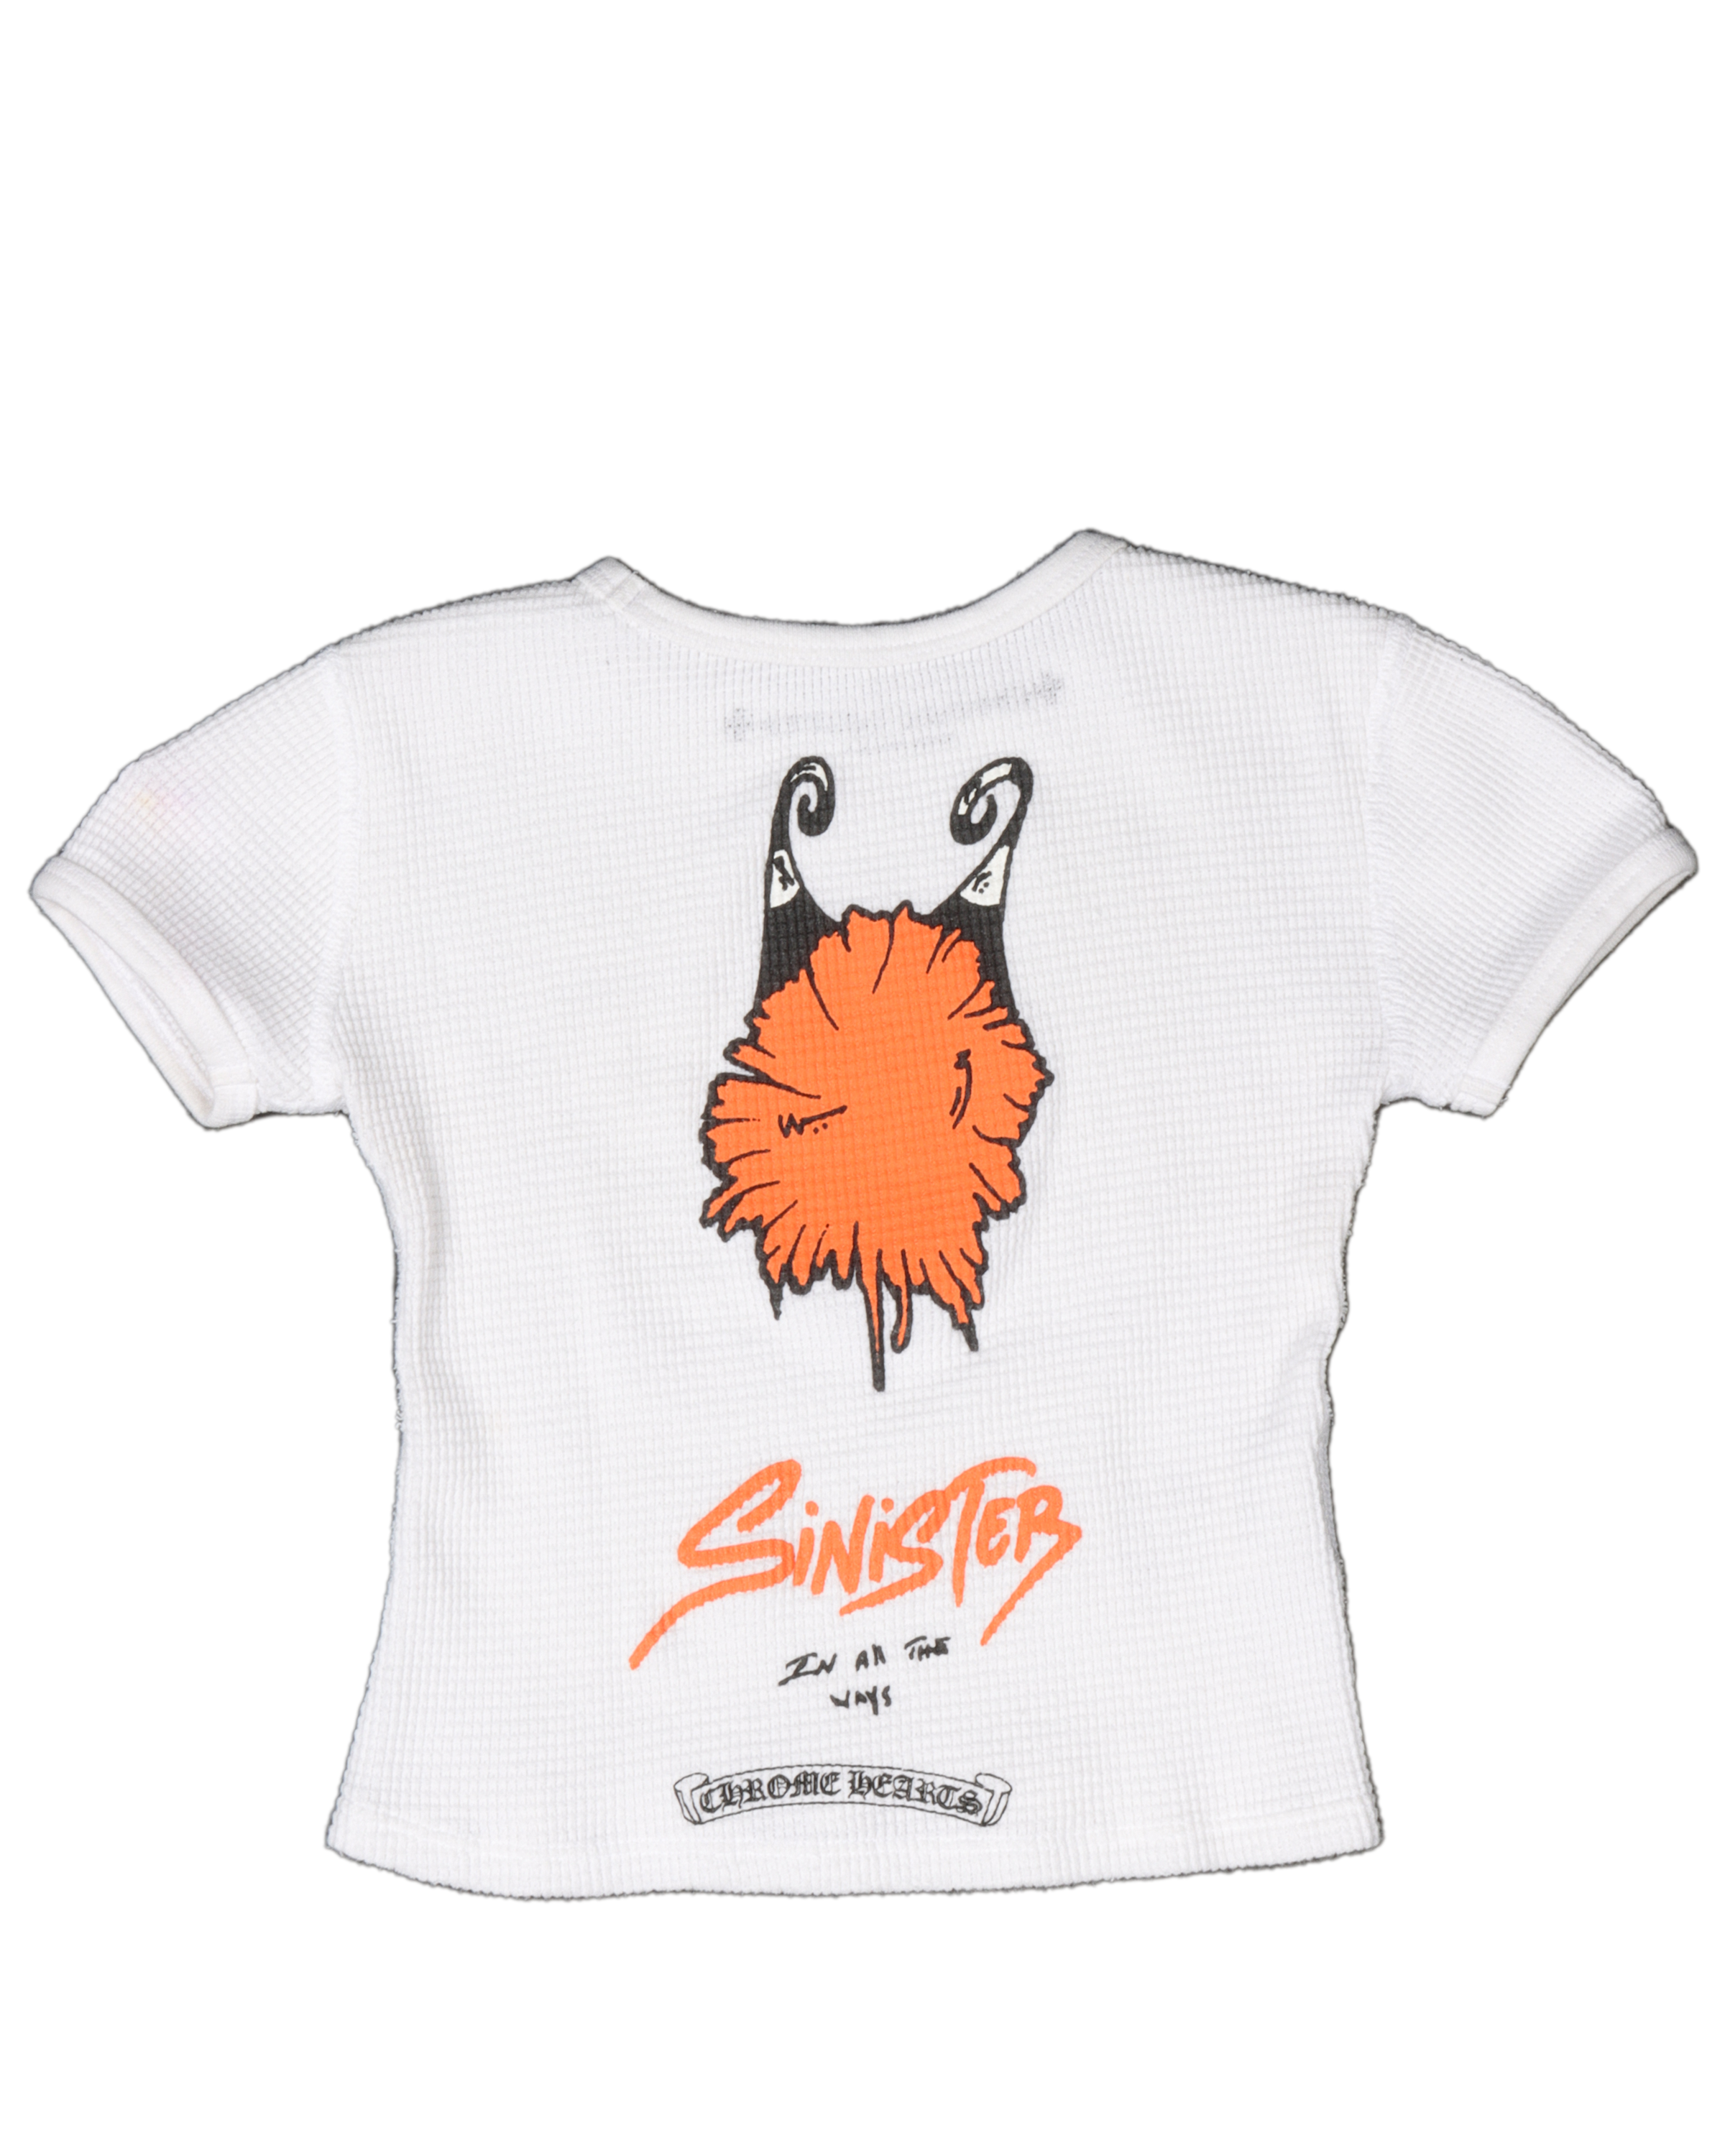 Matty Boy "Sinister" Thermal Baby T-Shirt